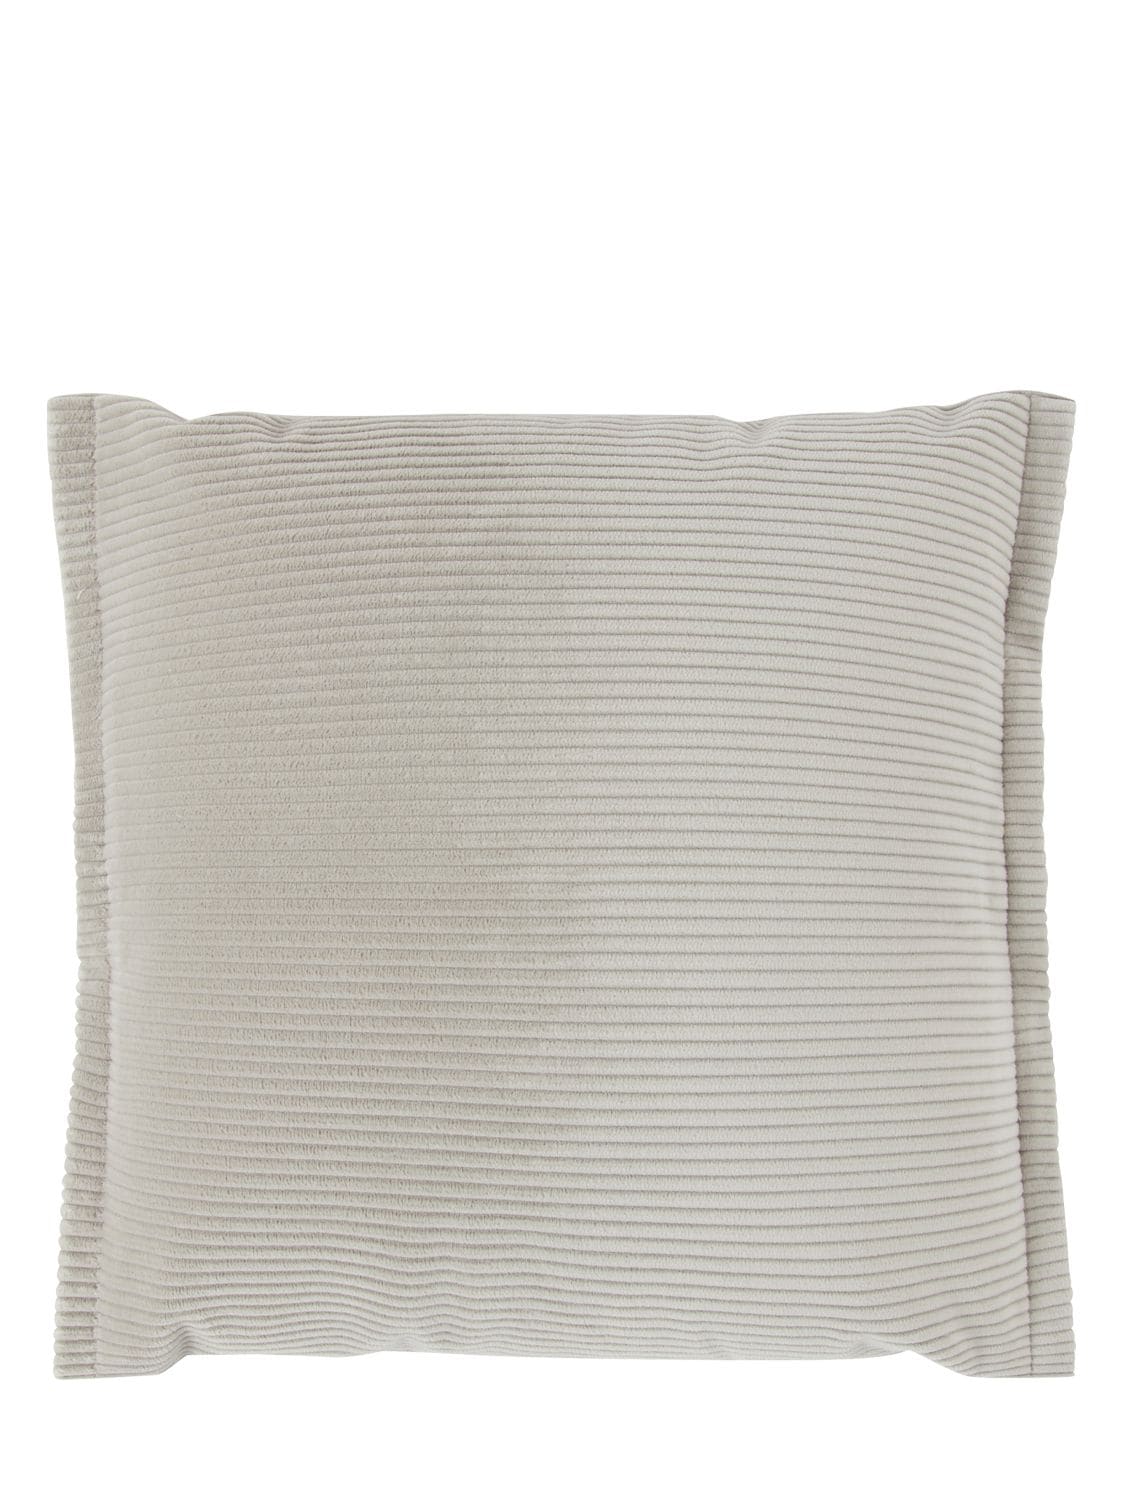 Lanerossi Dueville Cushion In Grey